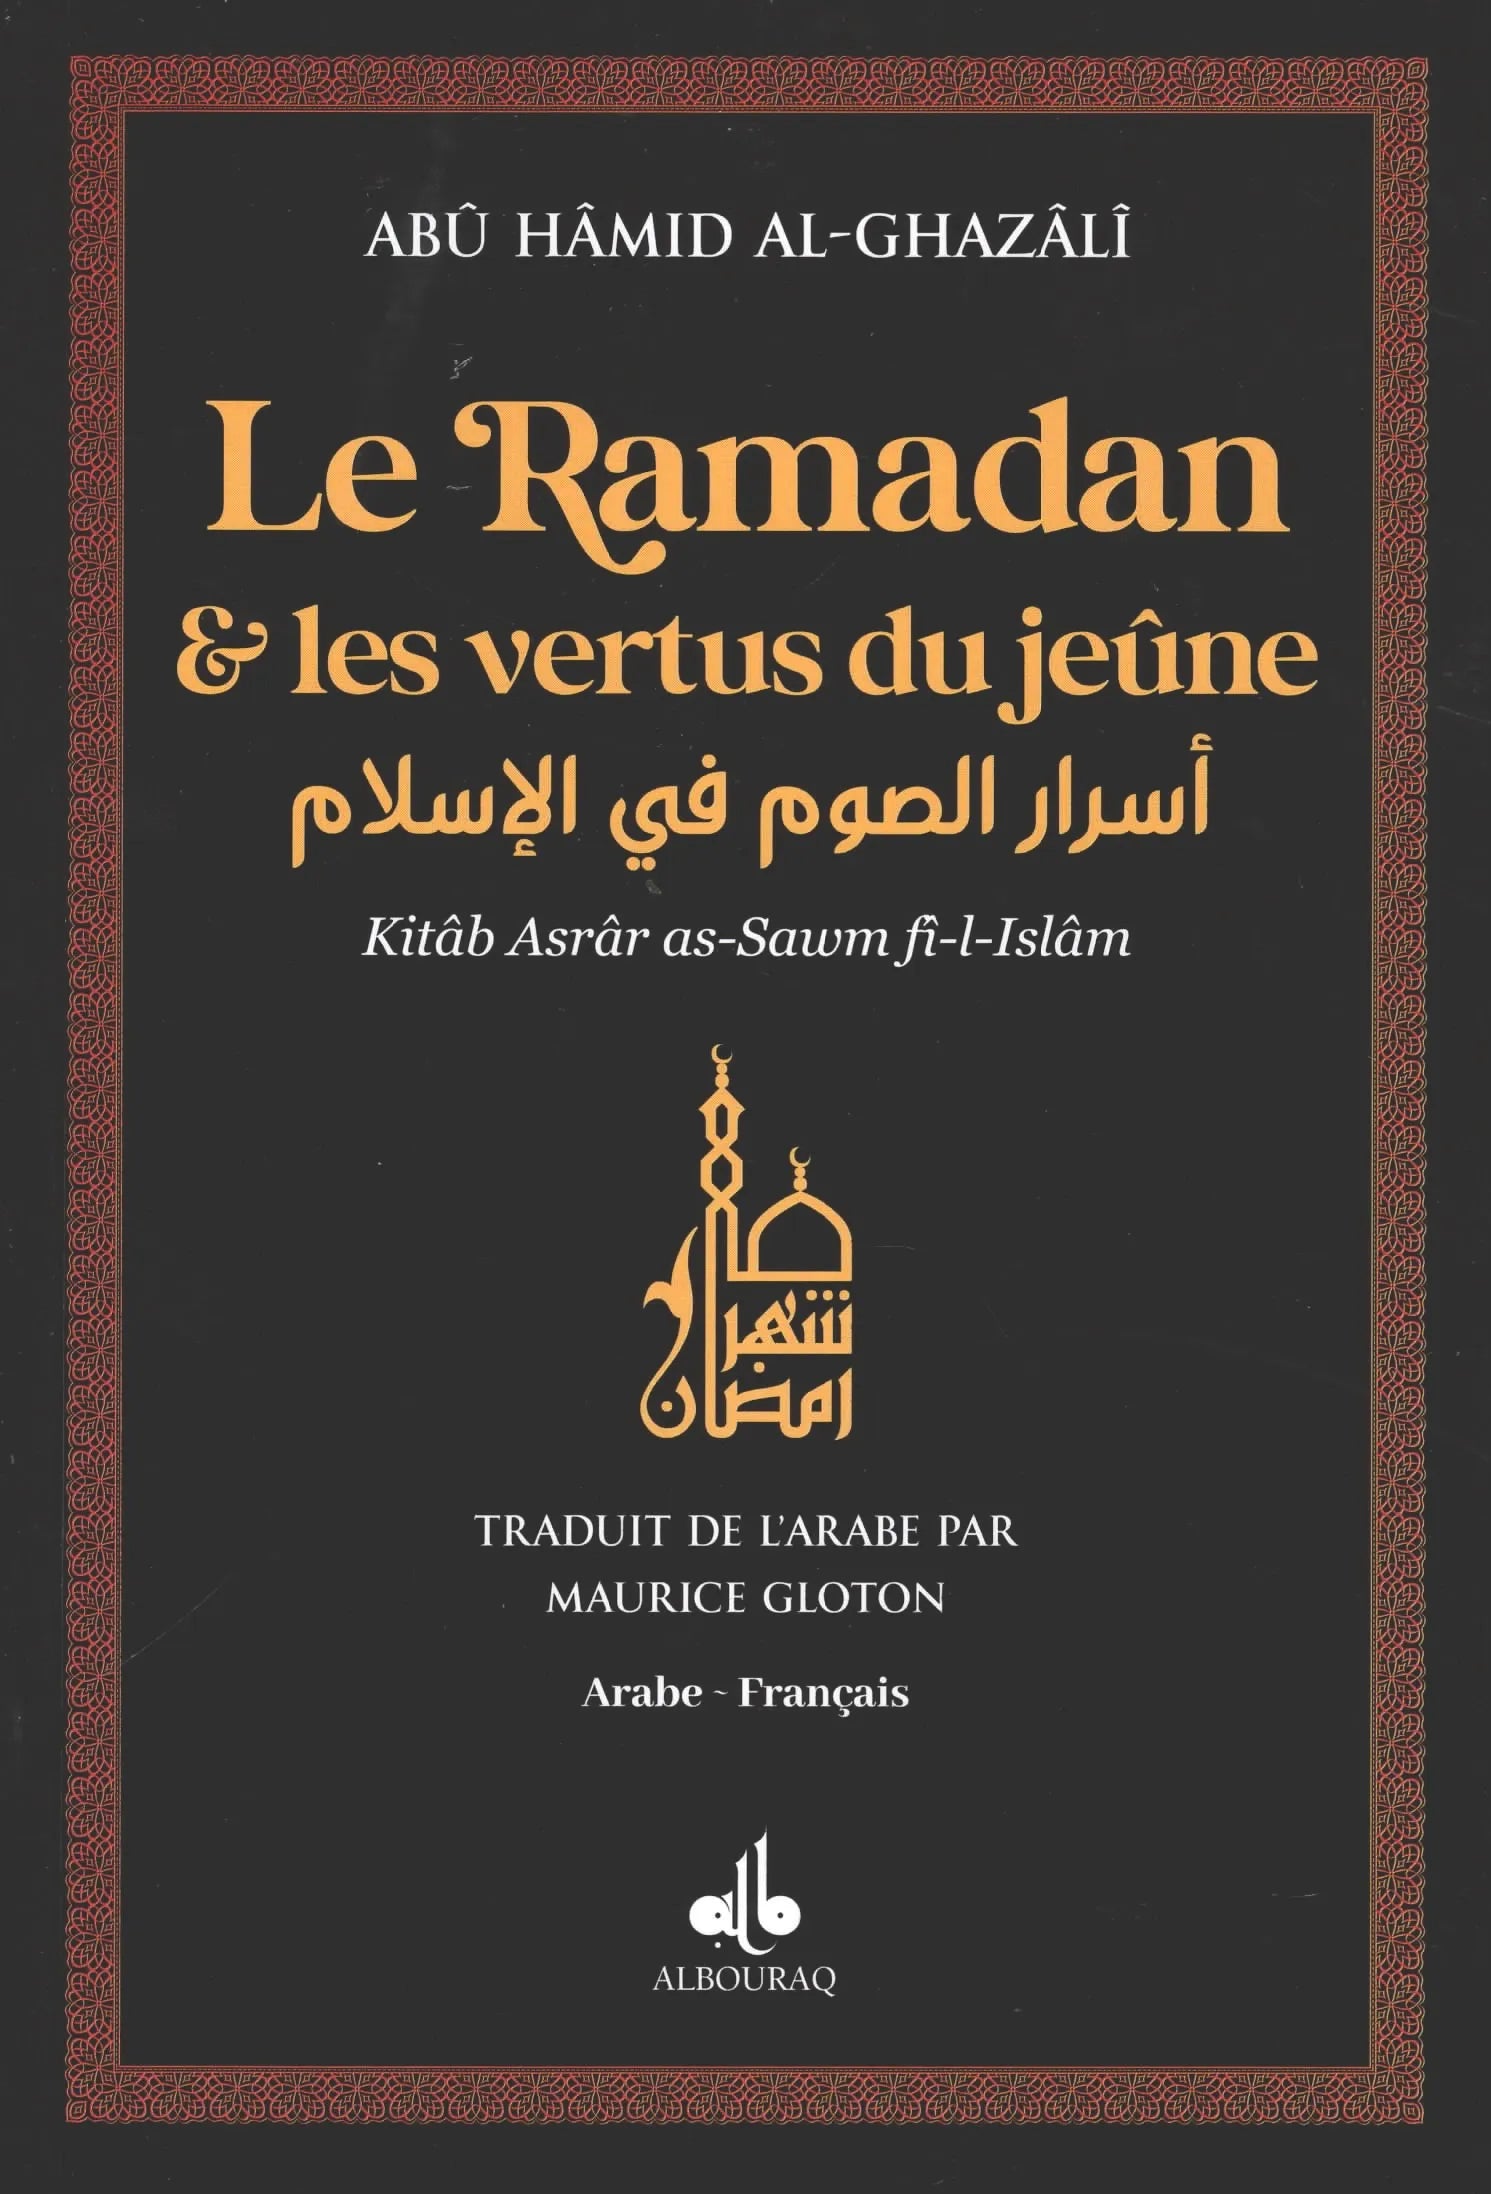 Le Ramadan & les vertus du jeûne par Abu Hamid Al-Ghazali Brun Albouraq